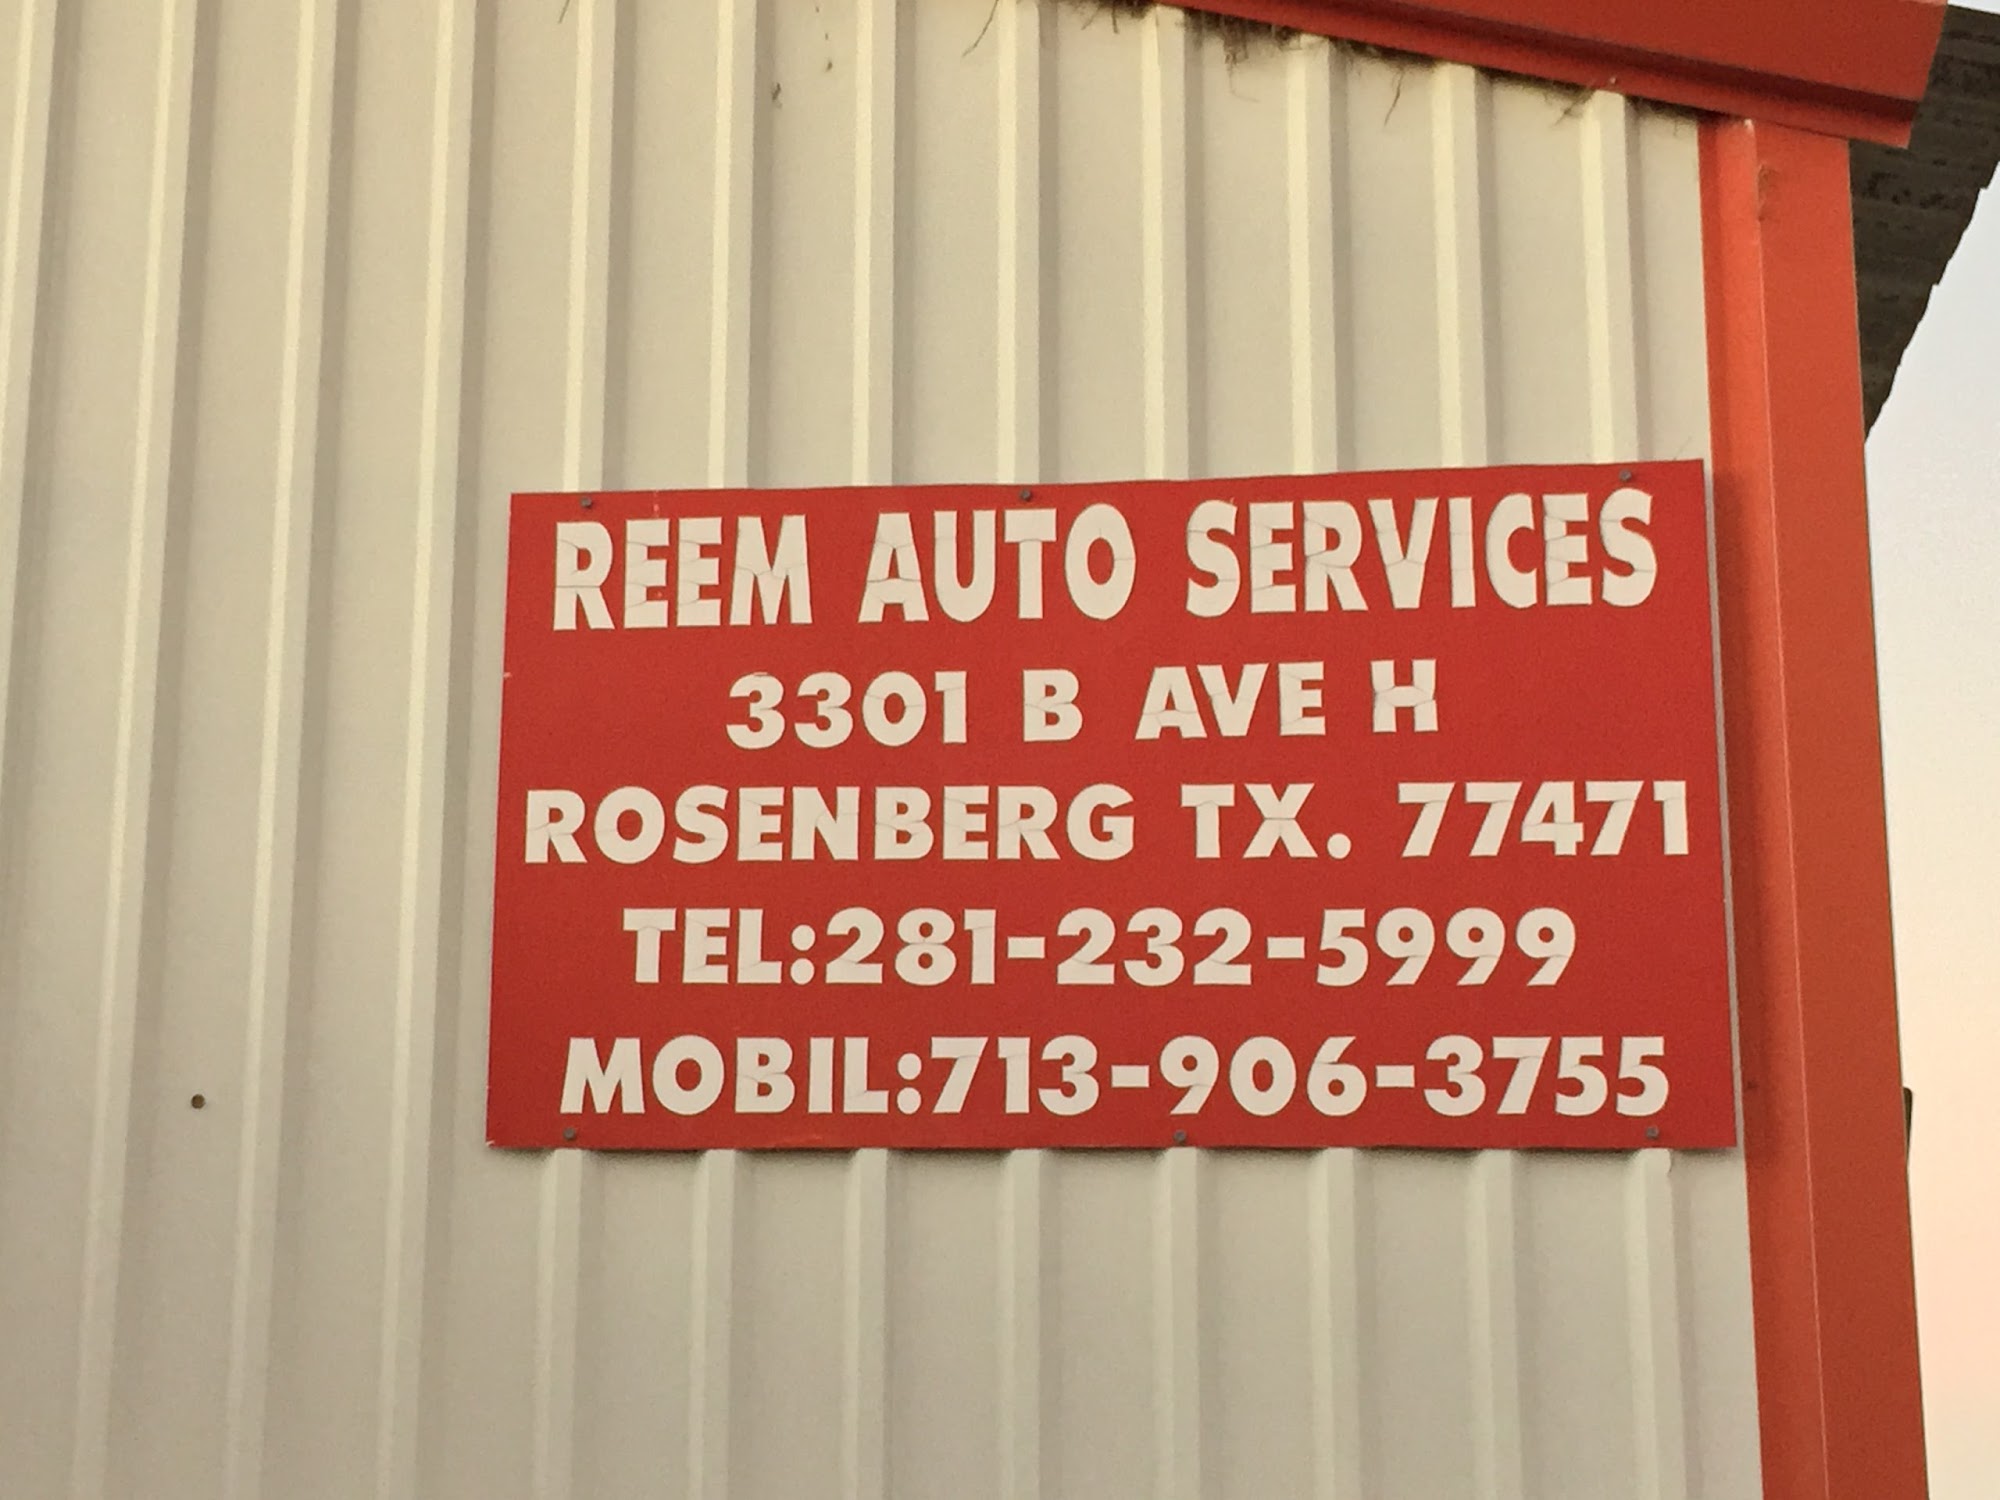 Reem Auto Services